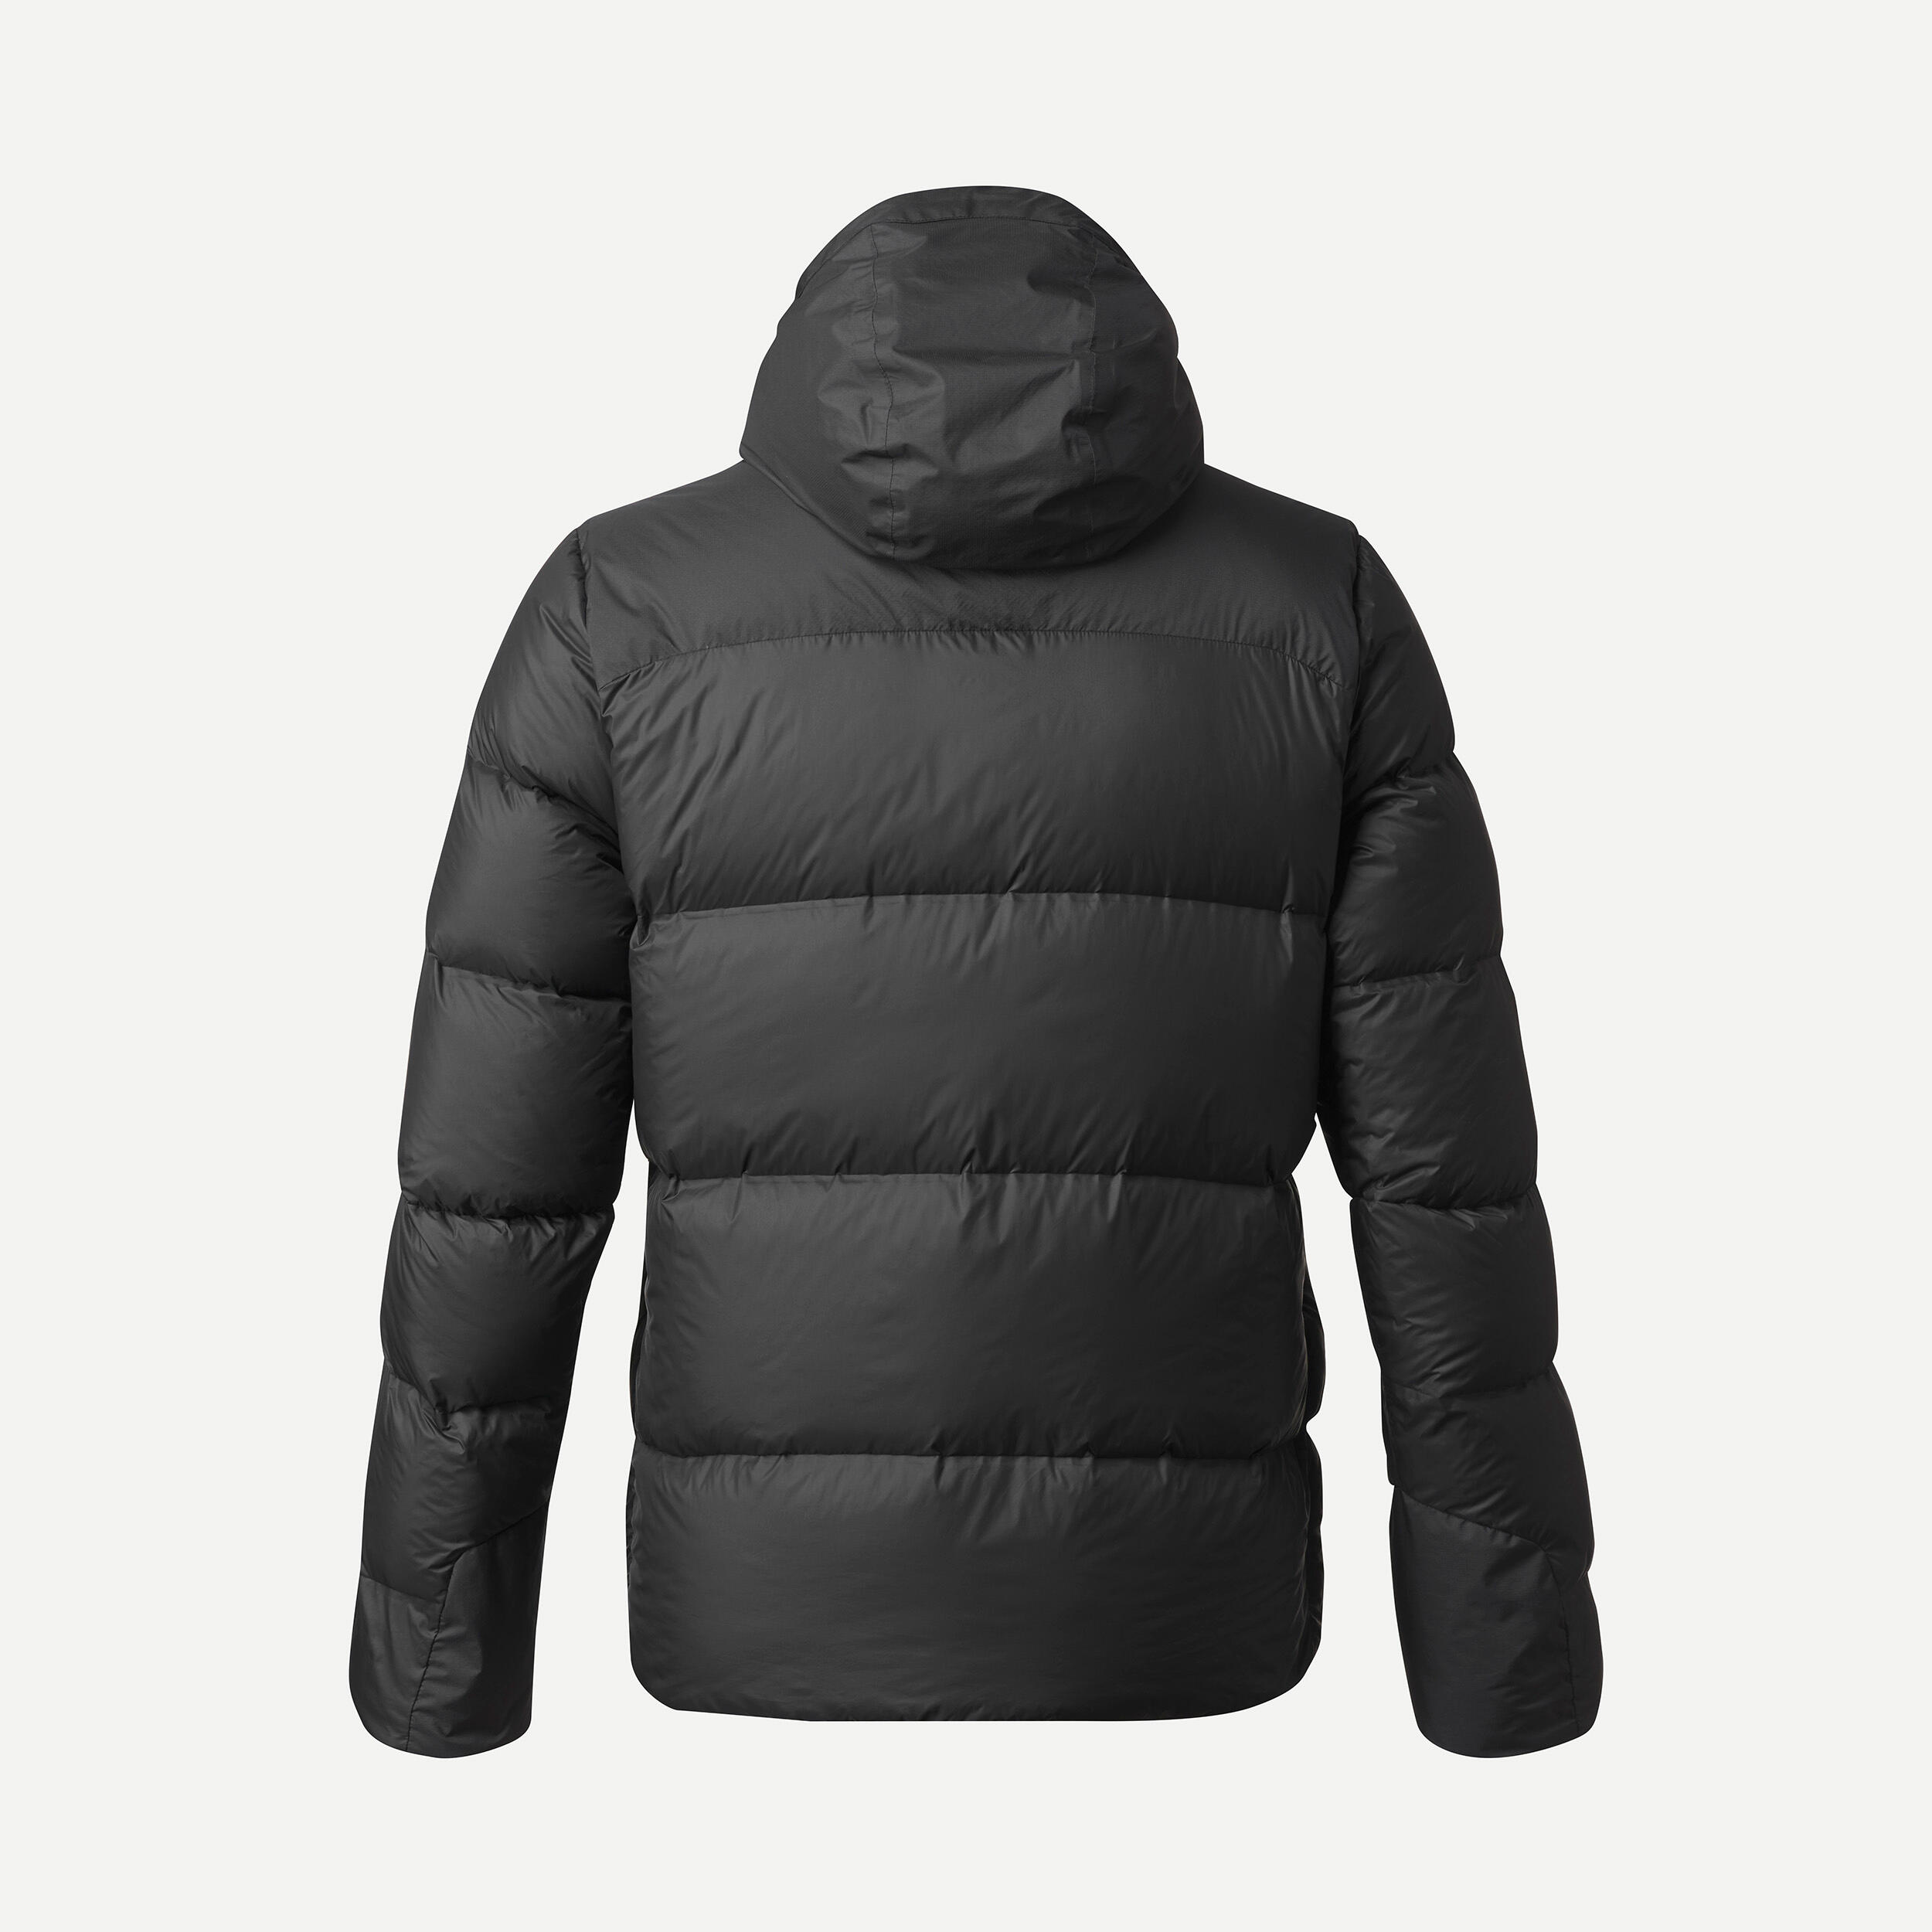 Men’s Down Winter Jacket - MT 900 Black - Carbon grey - Forclaz - Decathlon